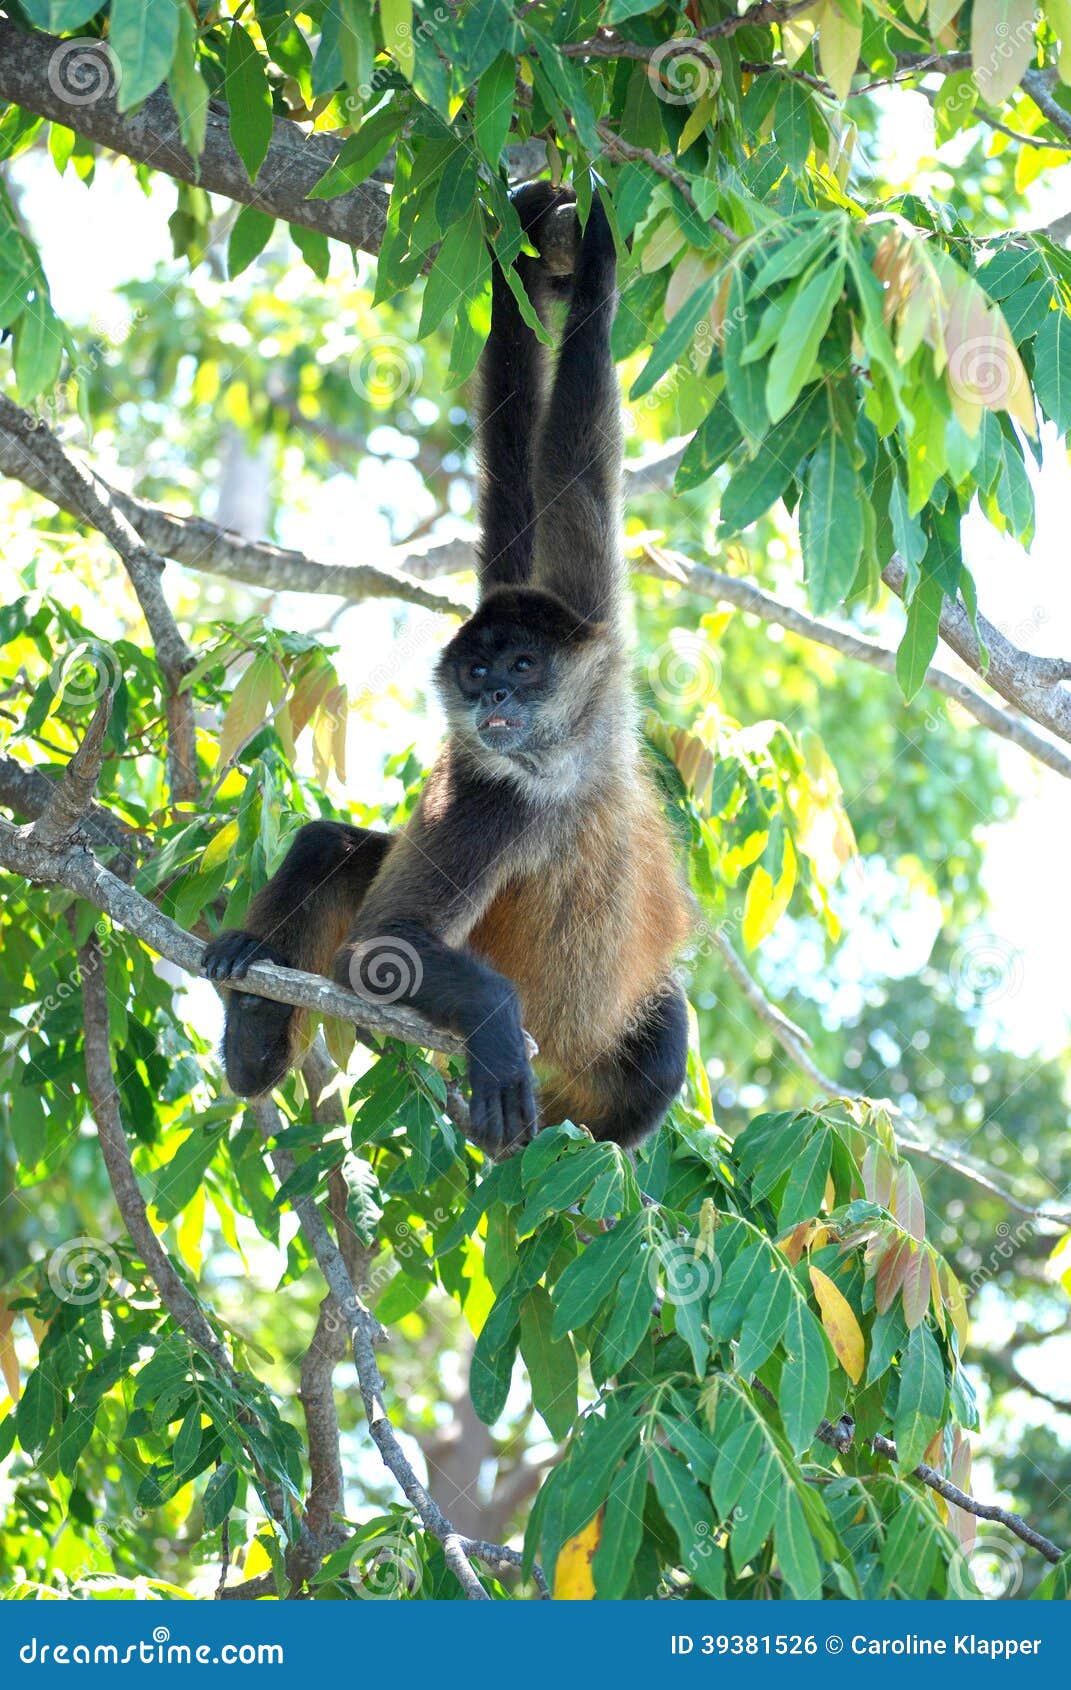 nicaraguan spider monkey